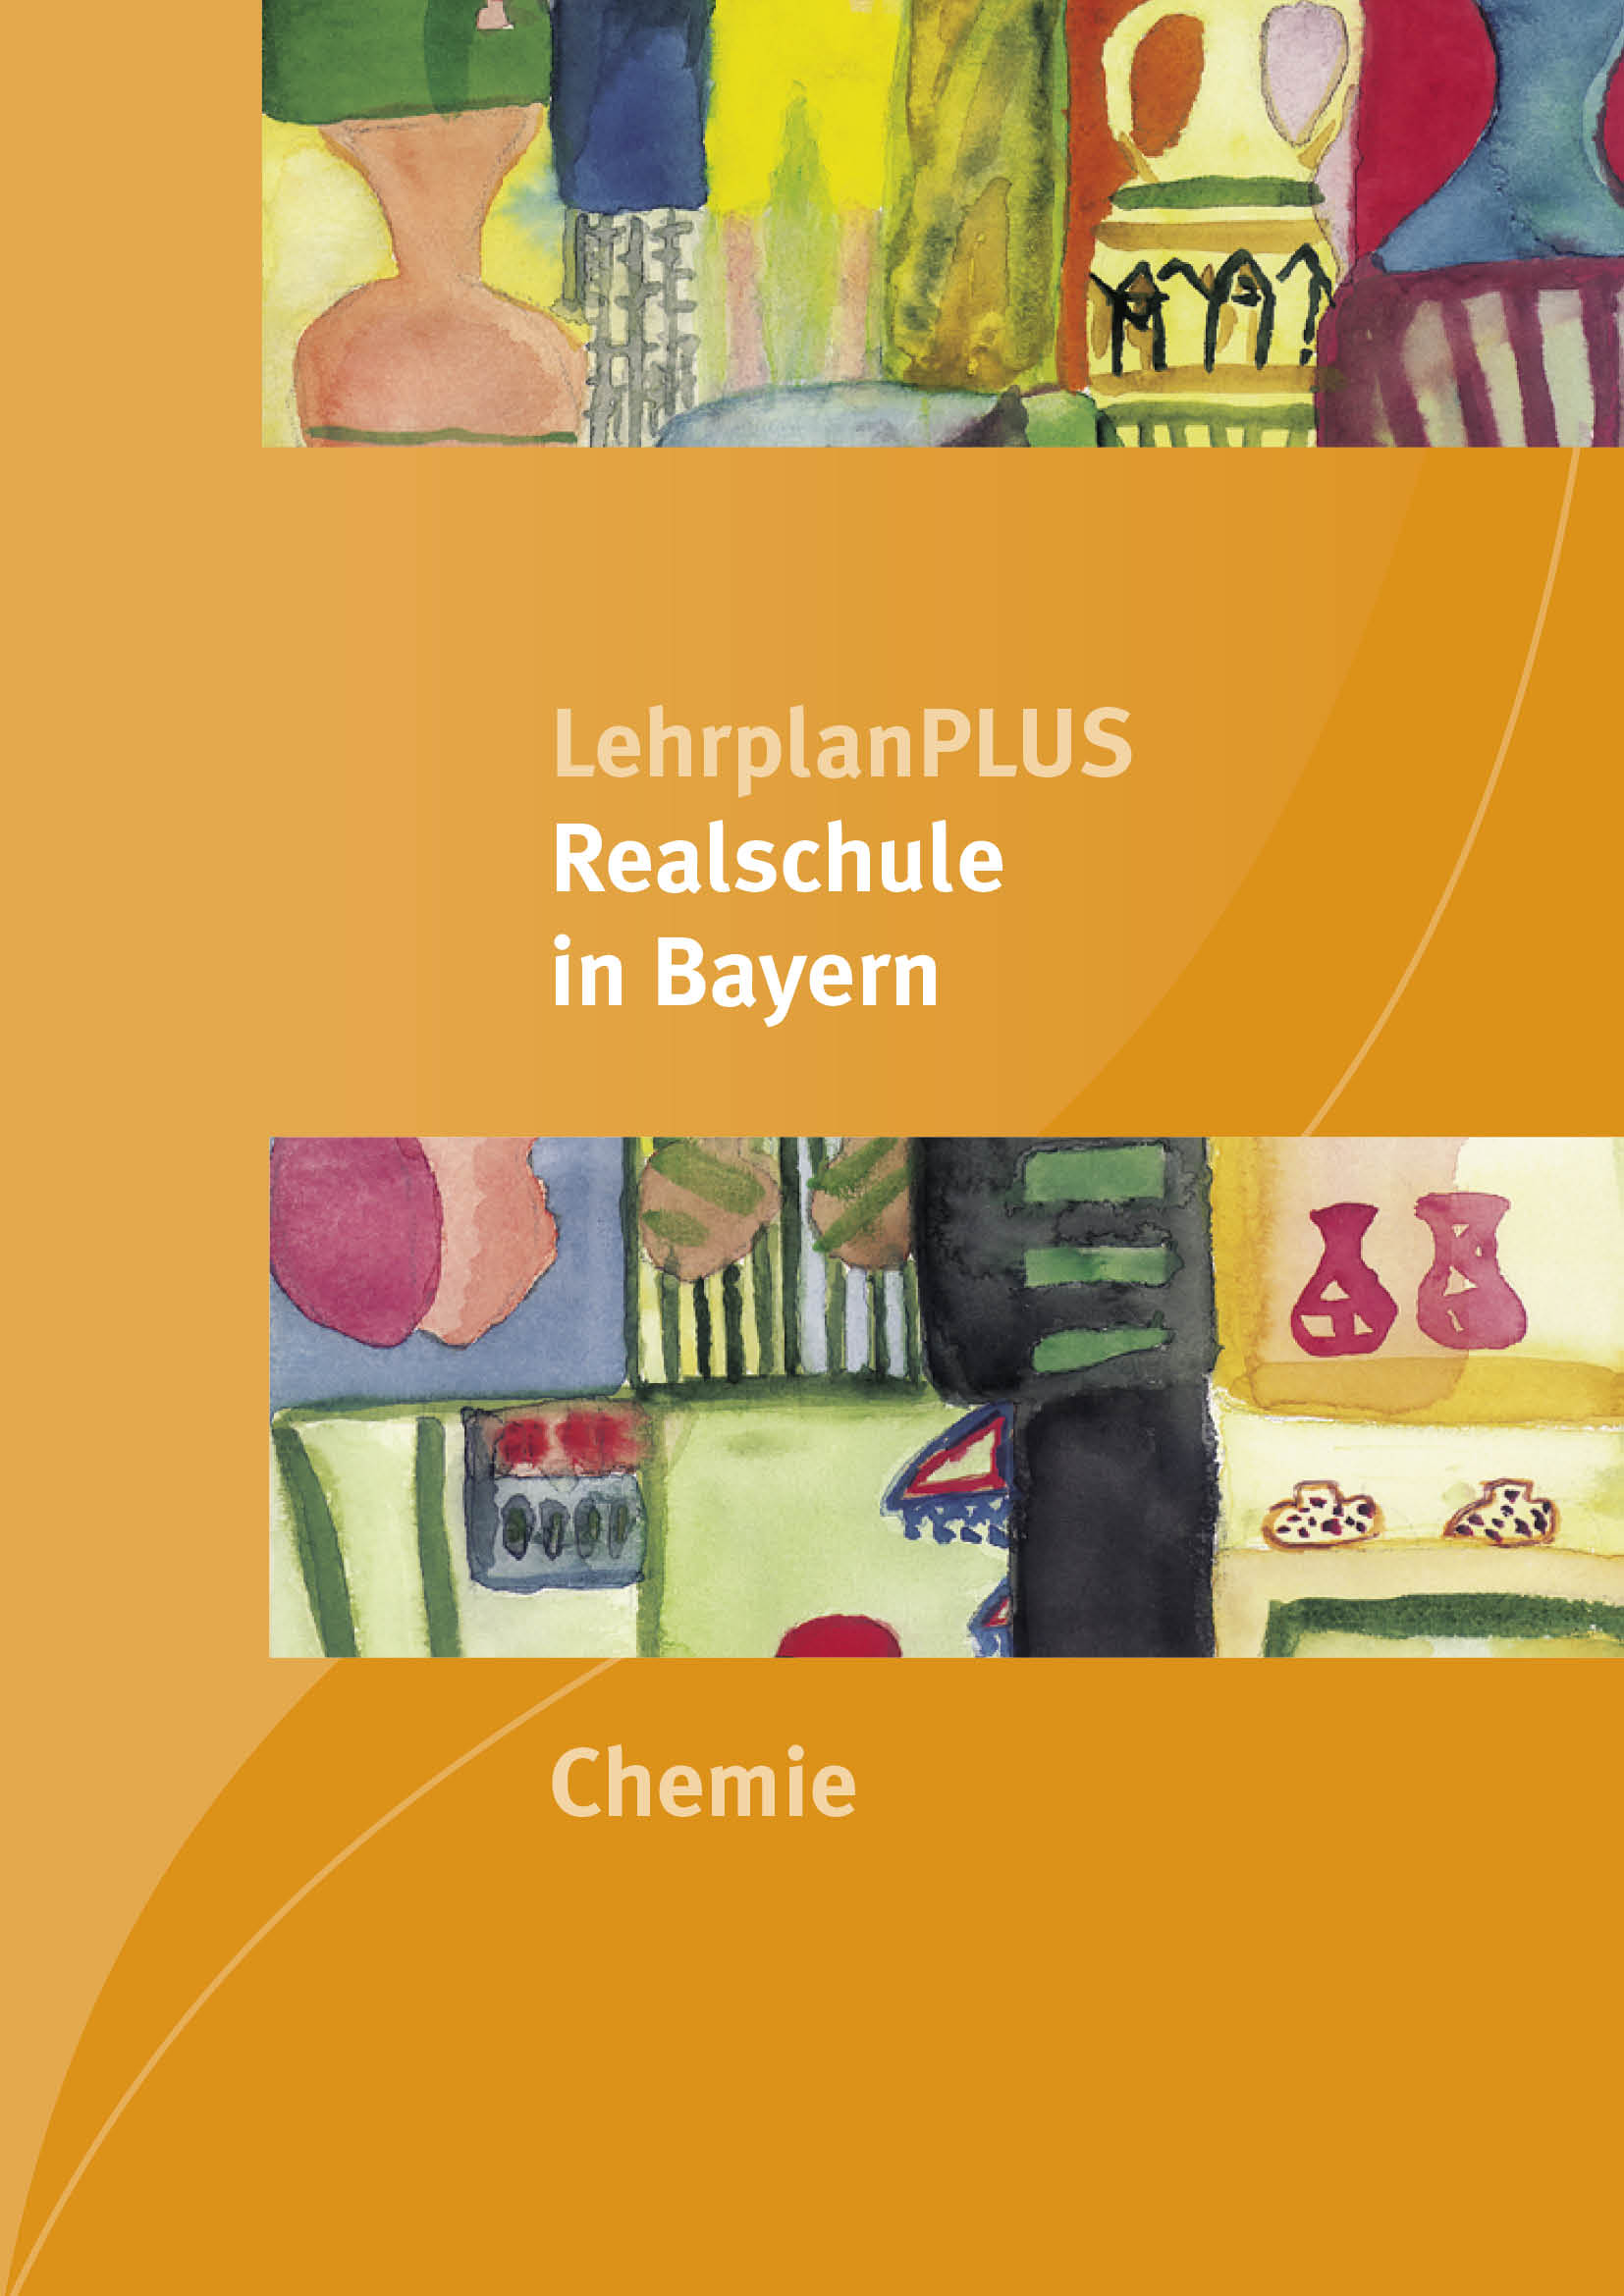 LehrplanPLUS Realschule in Bayern - Chemie